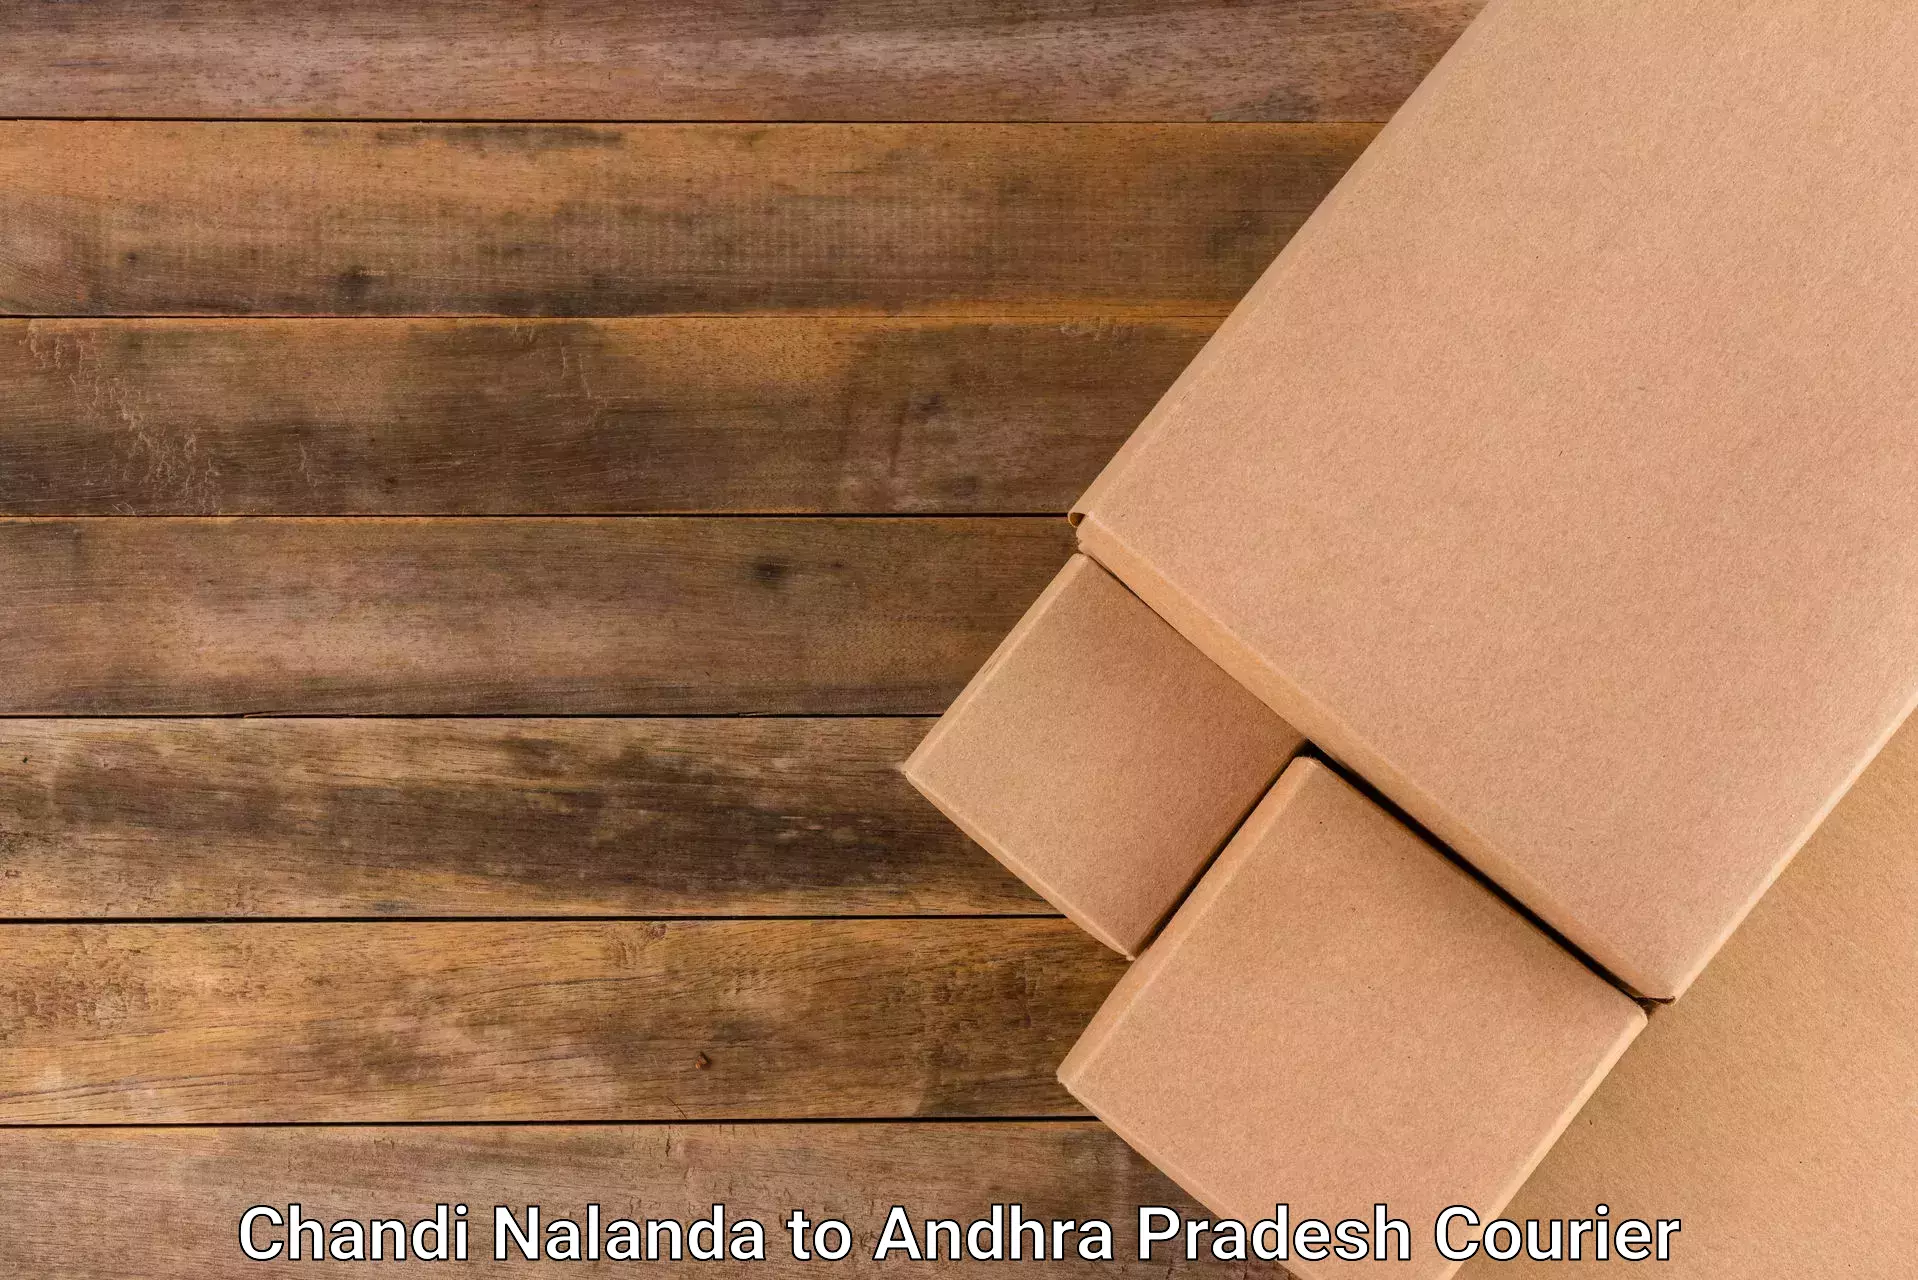 24-hour courier service Chandi Nalanda to Puttur Tirupati